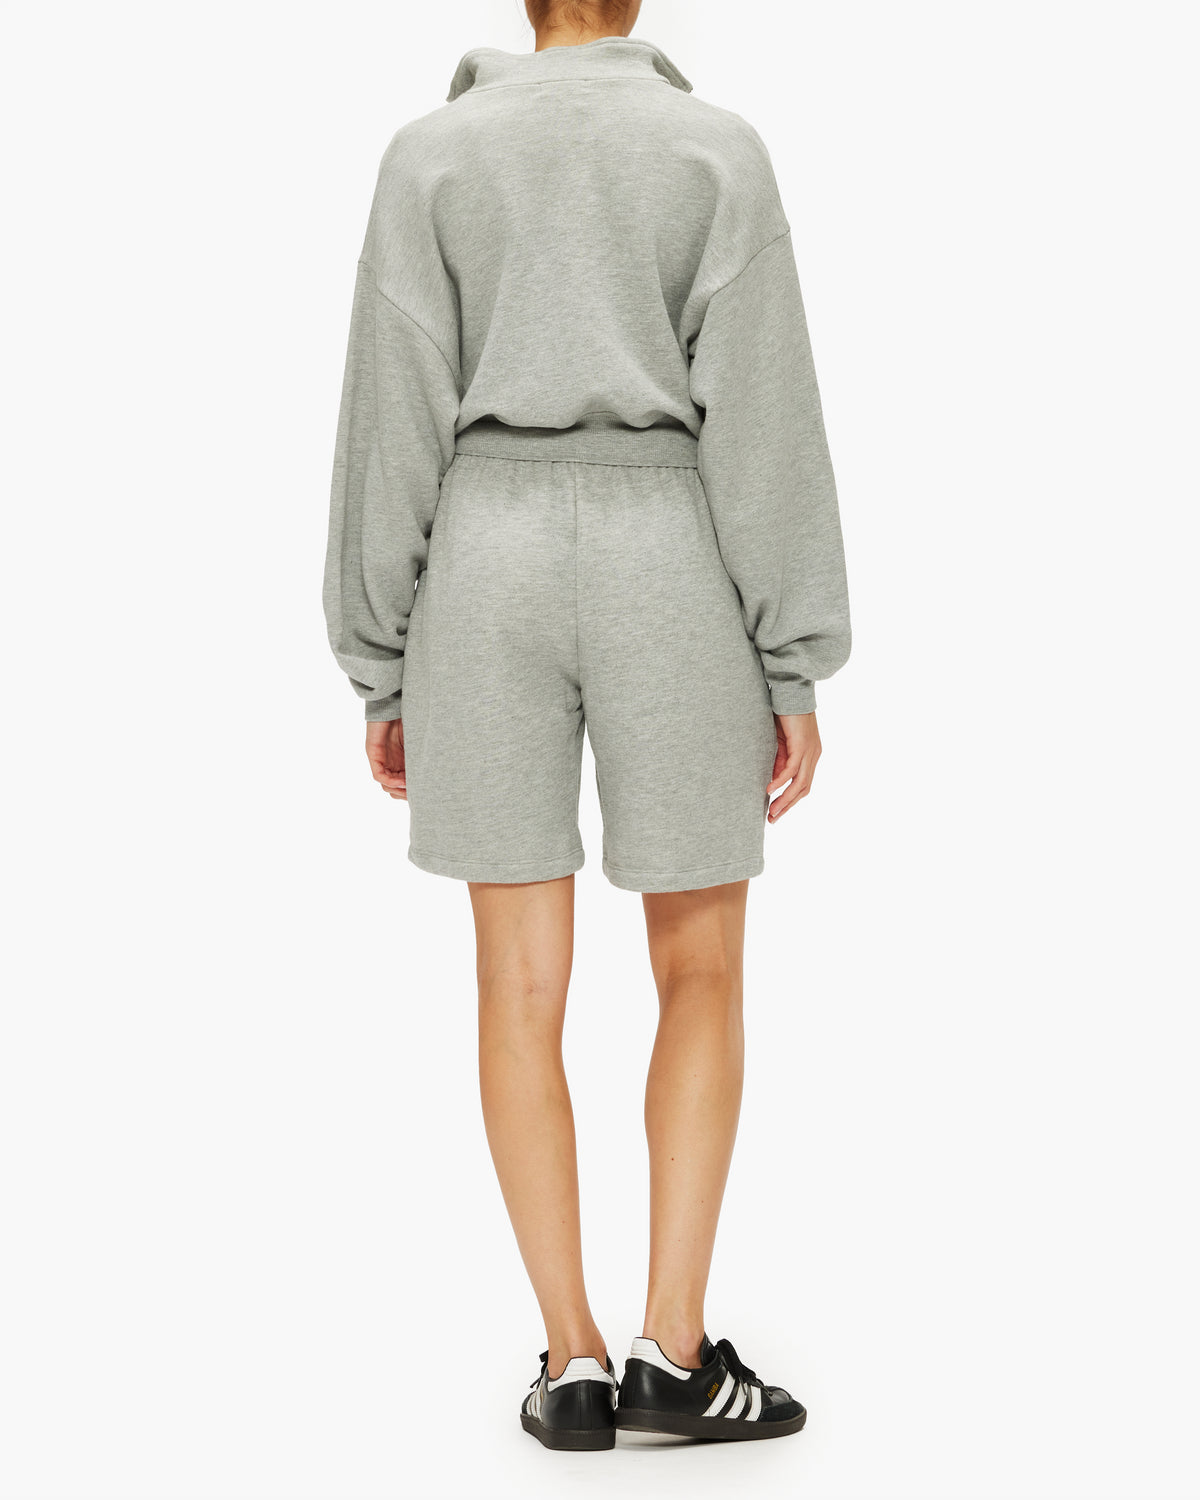 Eterne Cropped Half-Zip Sweatshirt